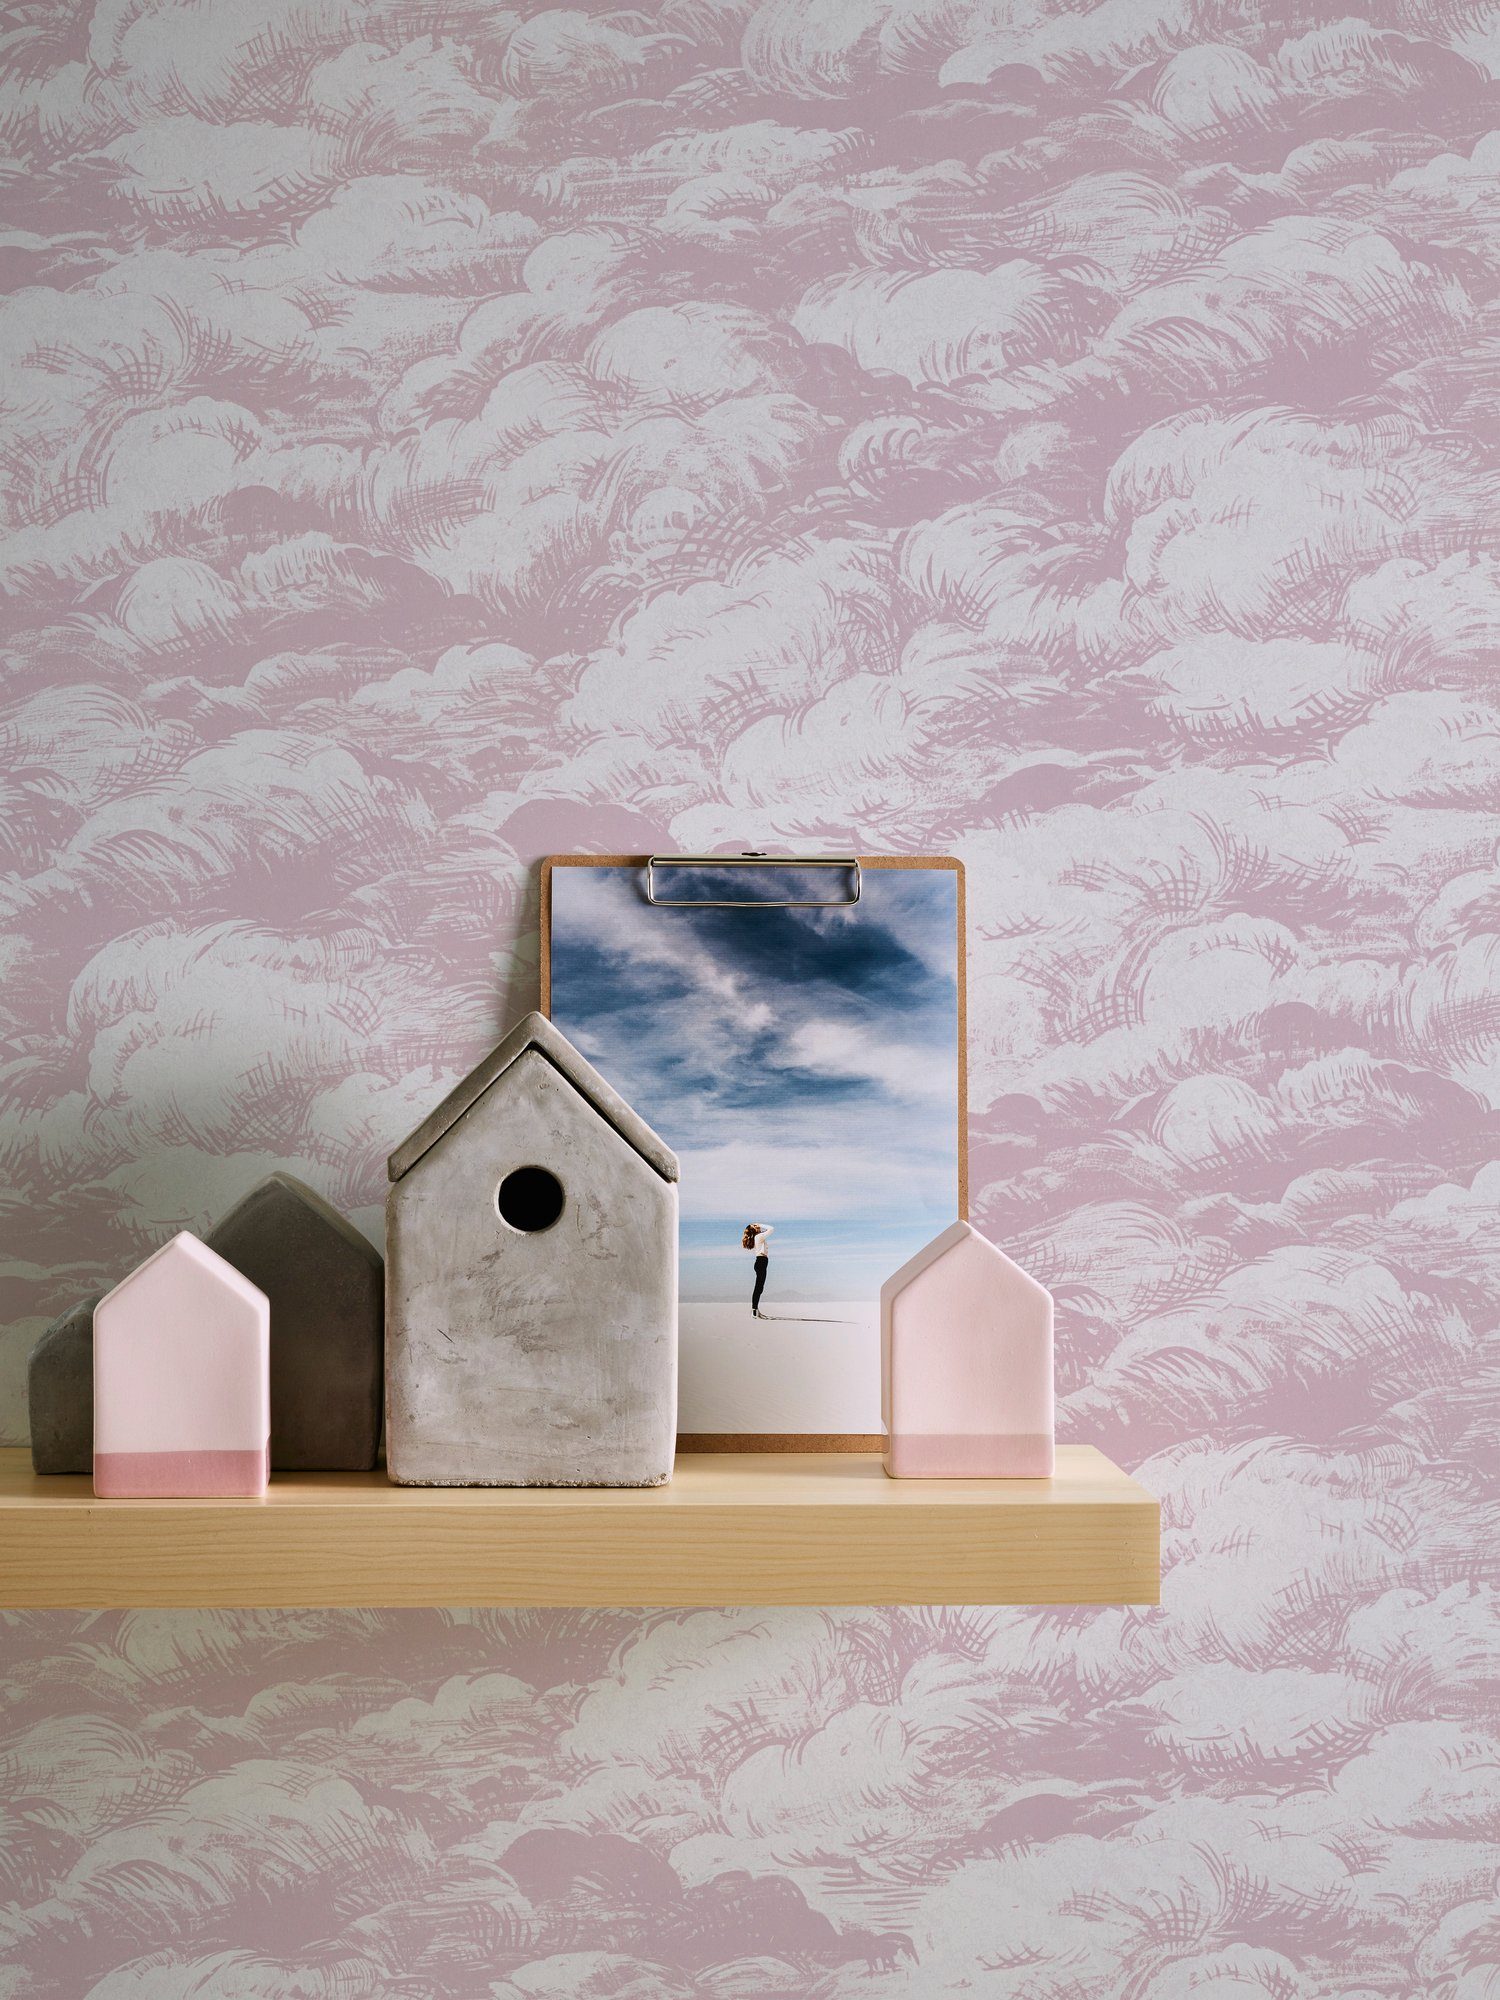 Vliestapete Wolken Chic, Architects glatt, Tapete Jungle Paper rosa/weiß